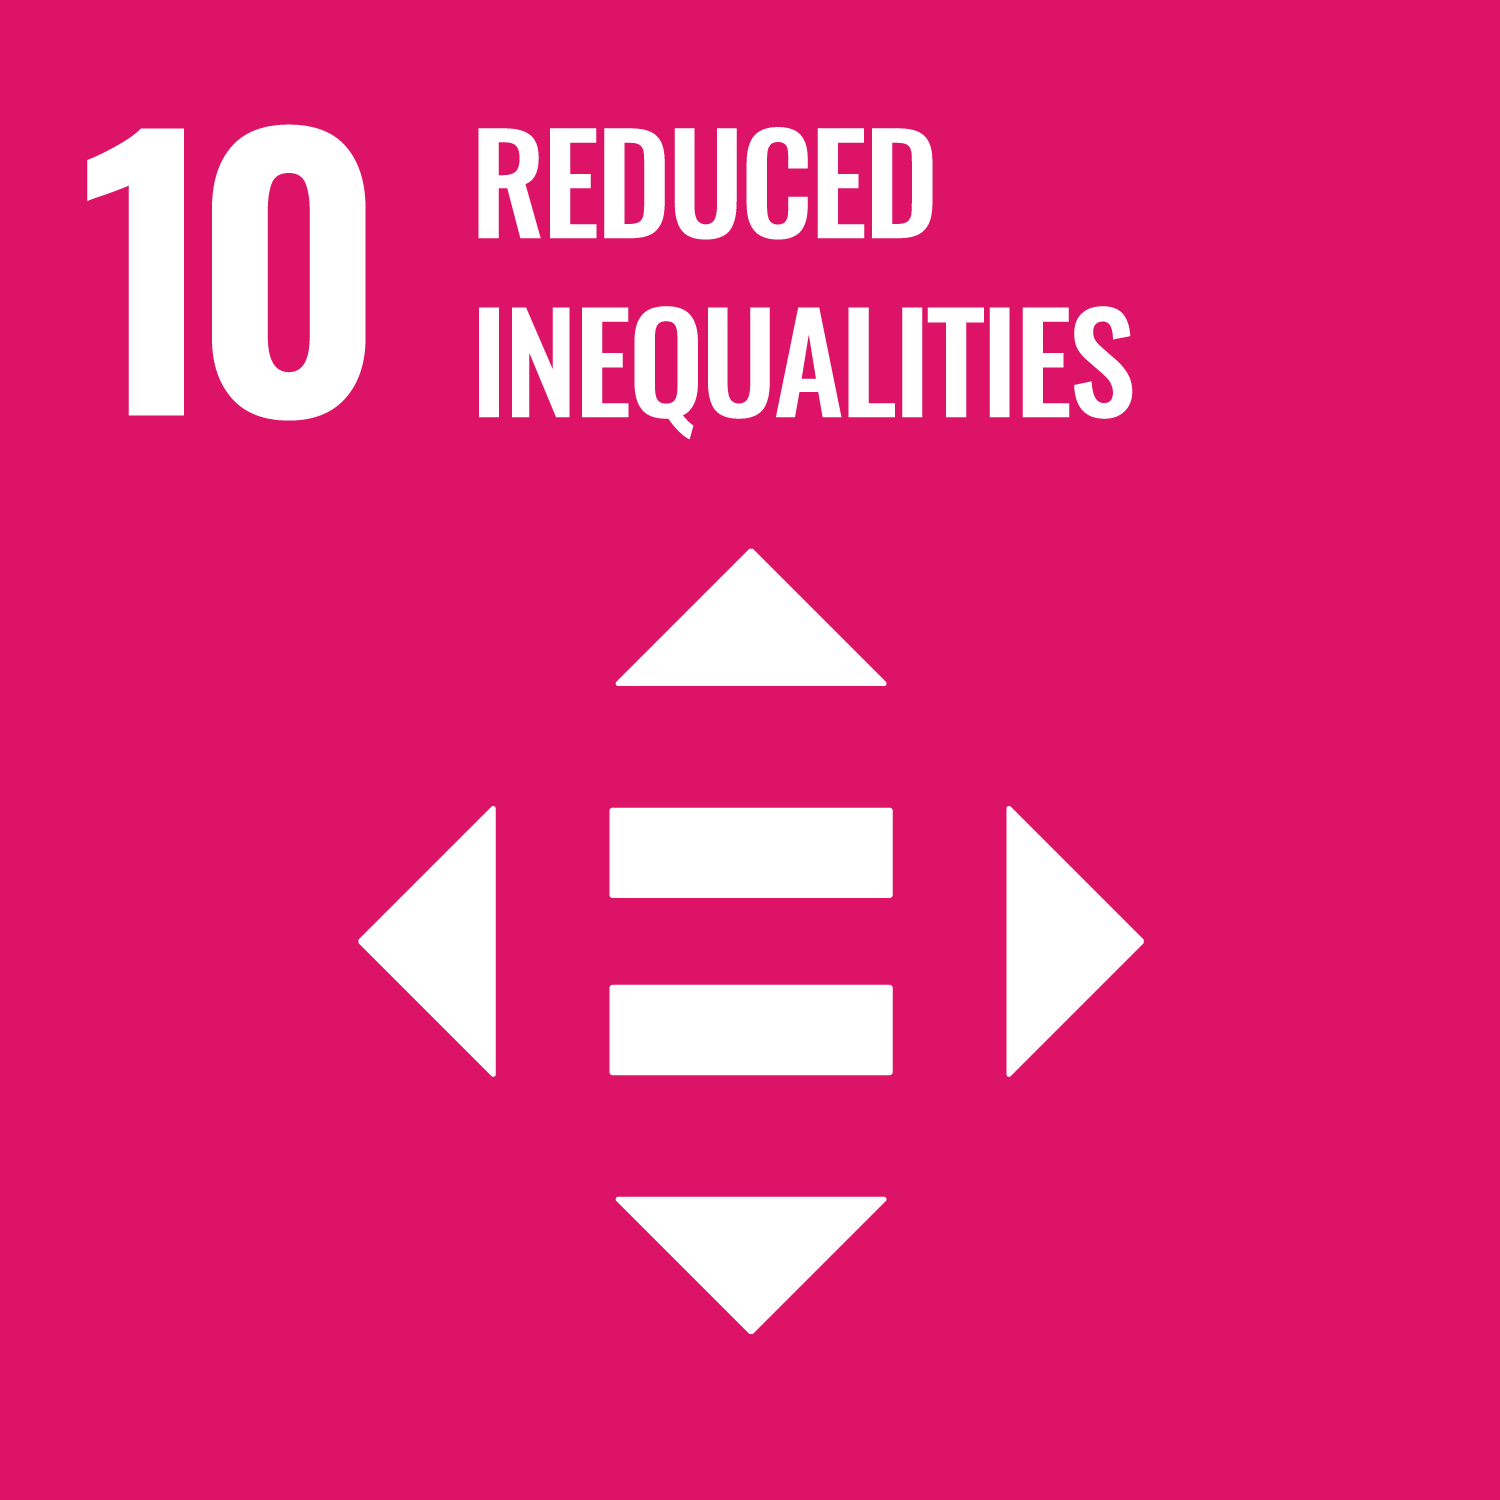 UN Sustainable Development Goal 10 - Reduced Inequalities